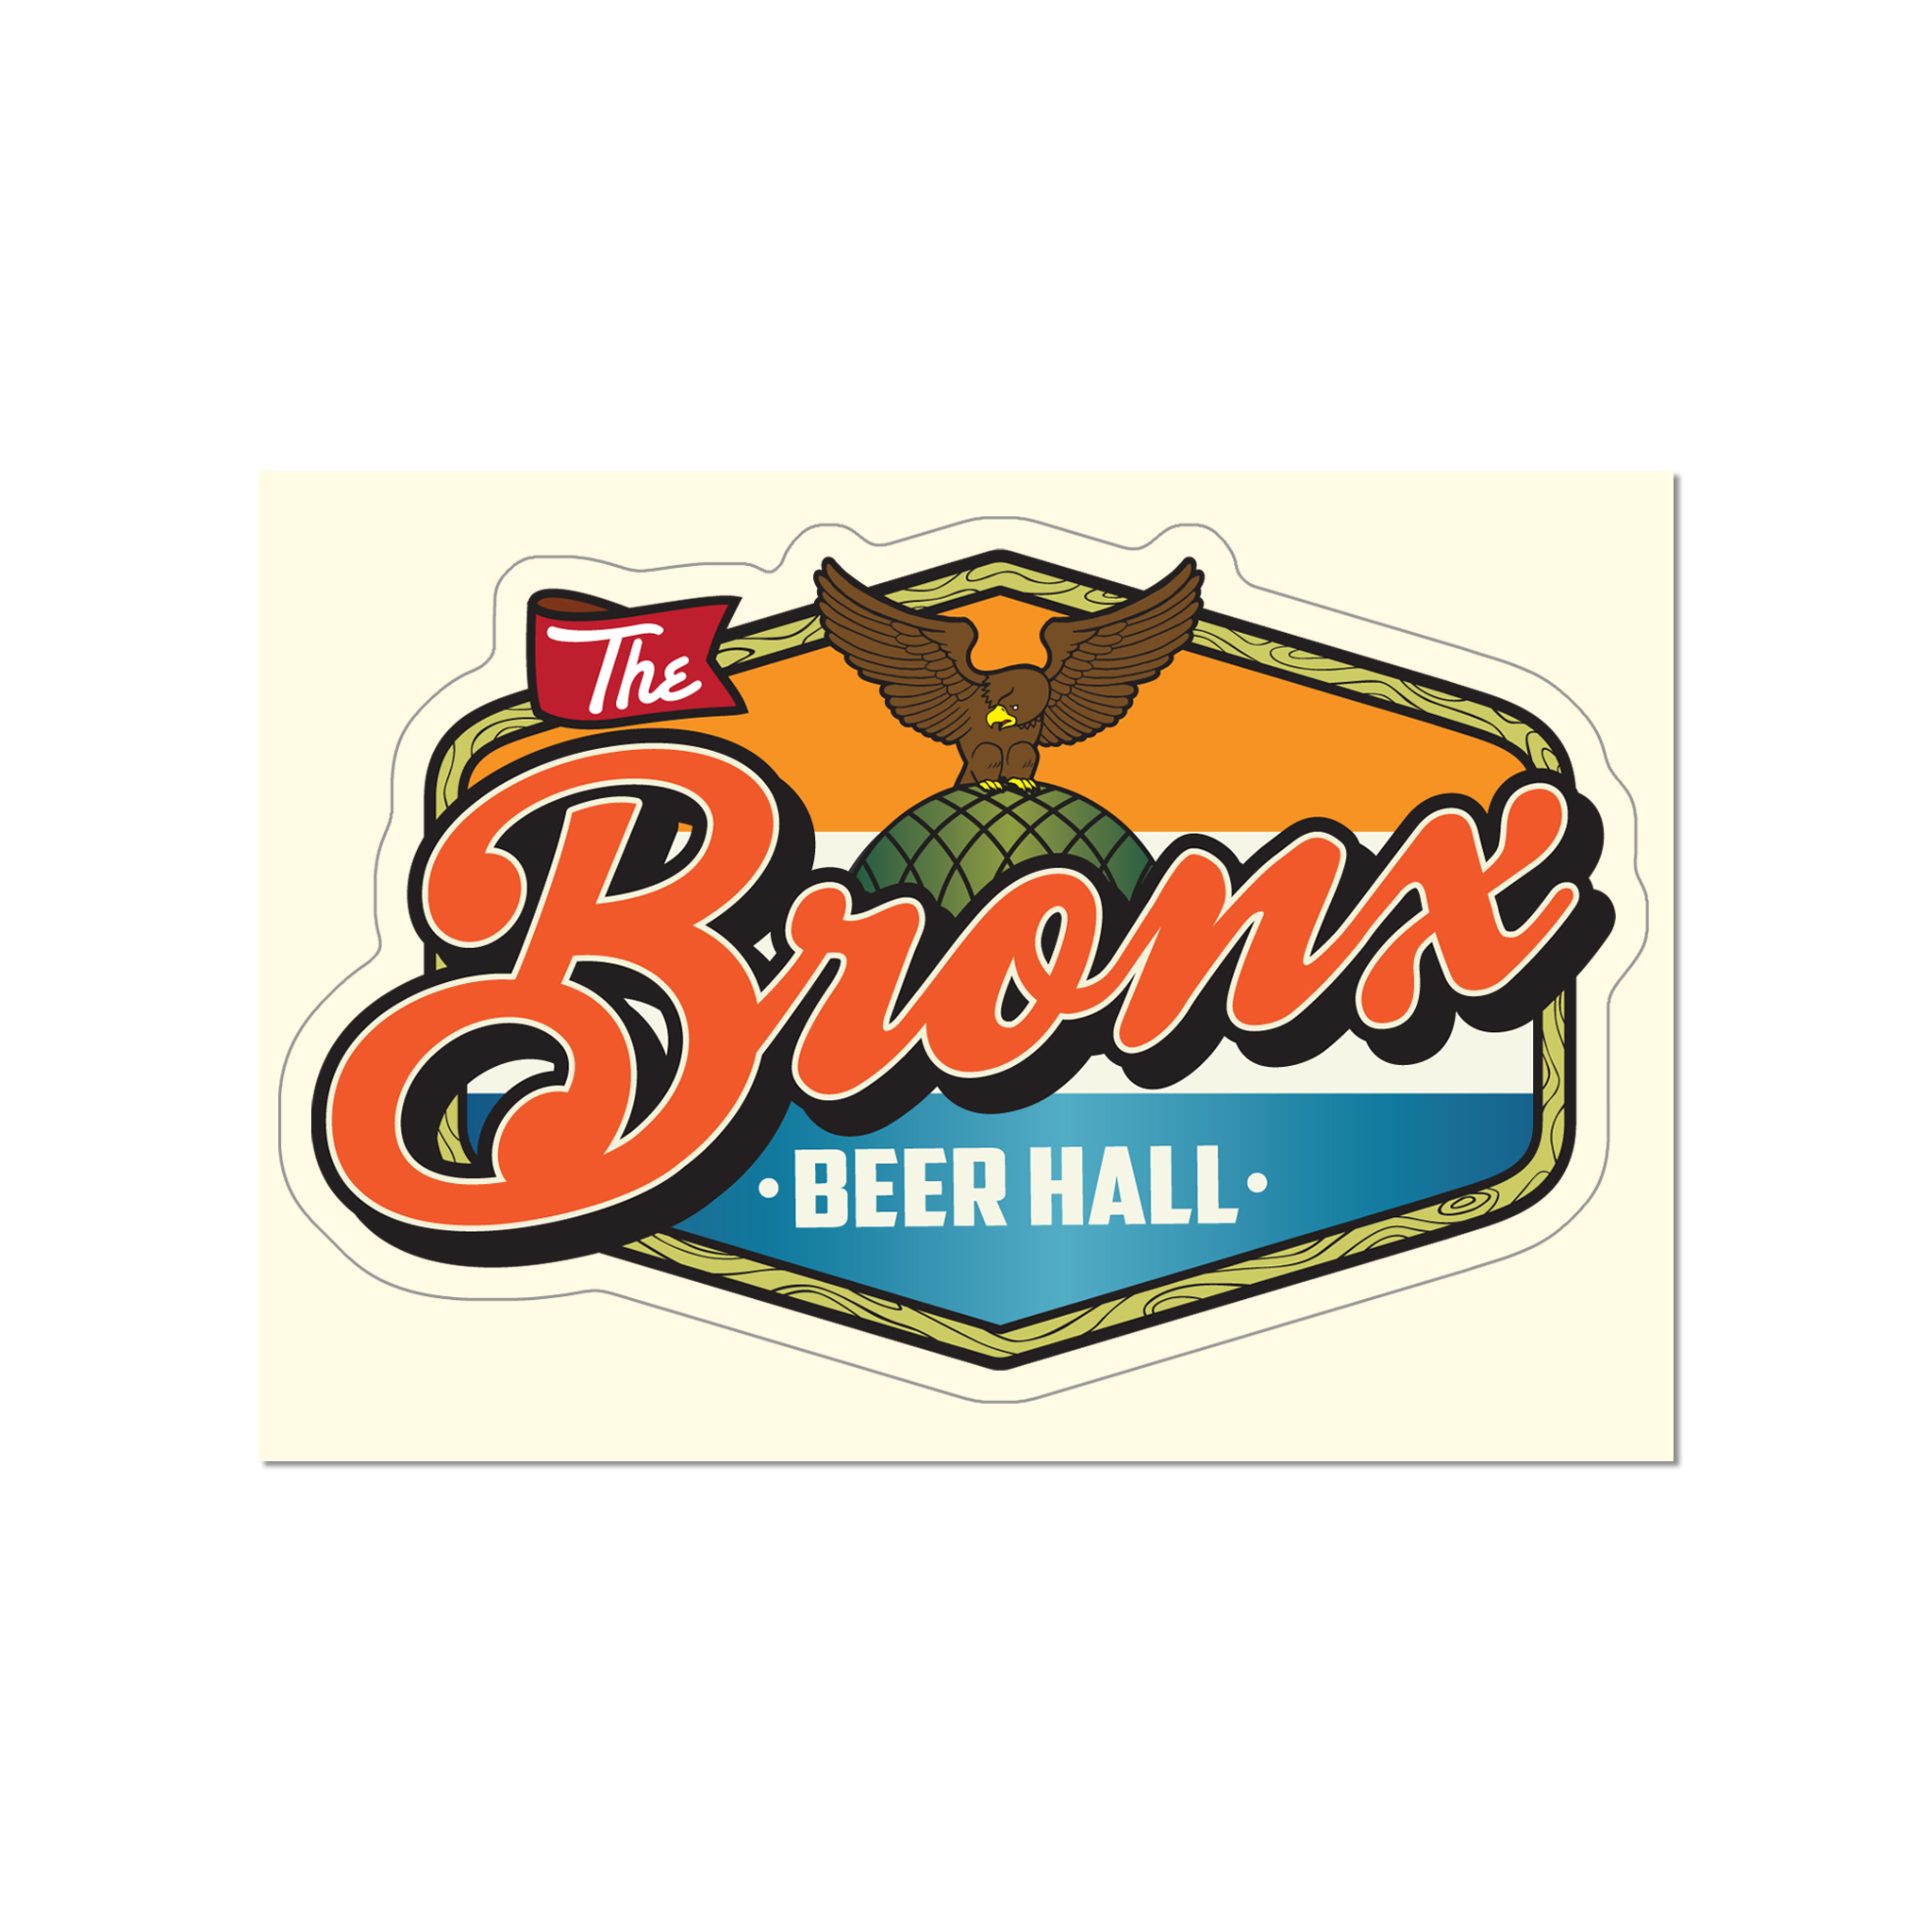 Bronx Beer Hall Sticker Postcard Front